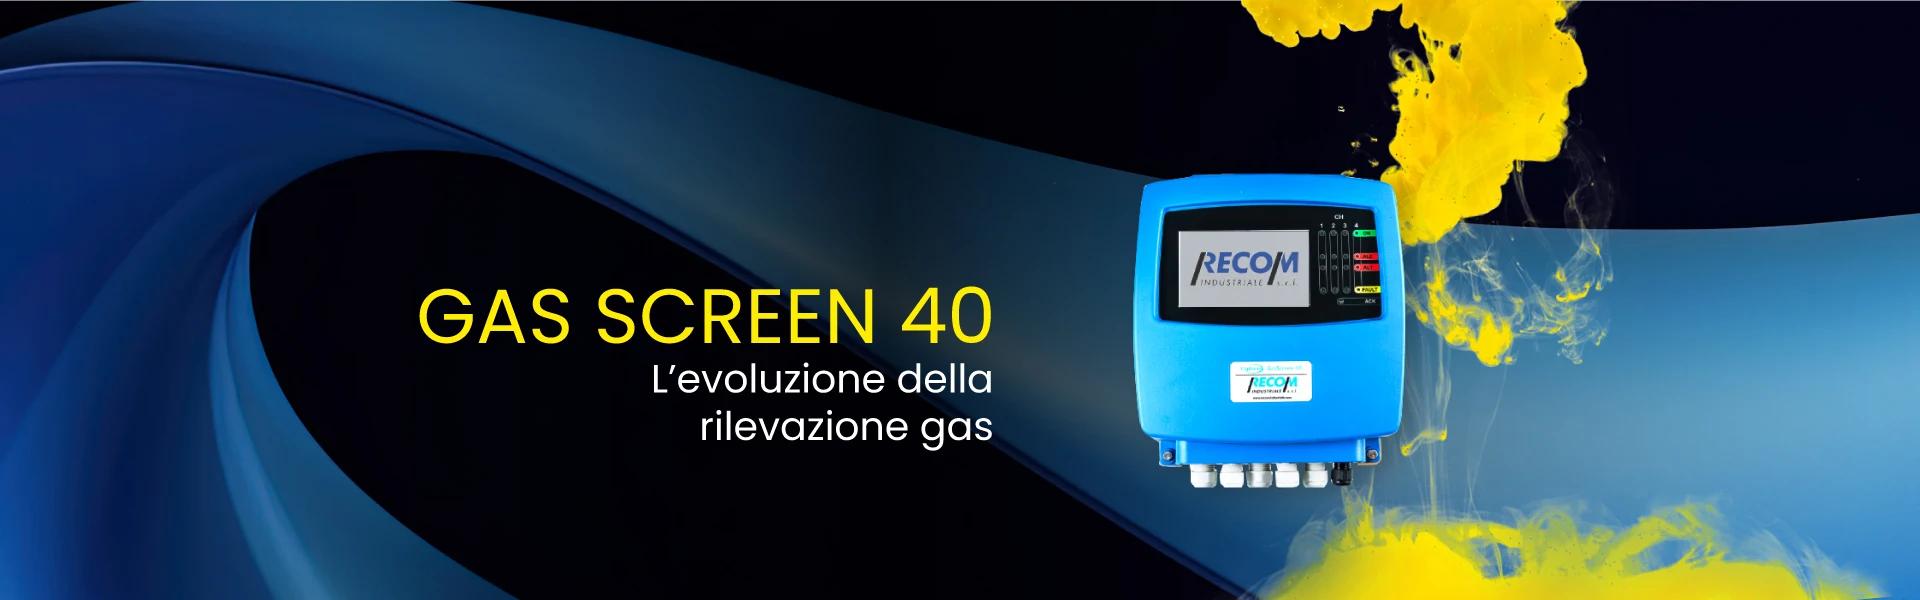 Recom industriale gas screen 40